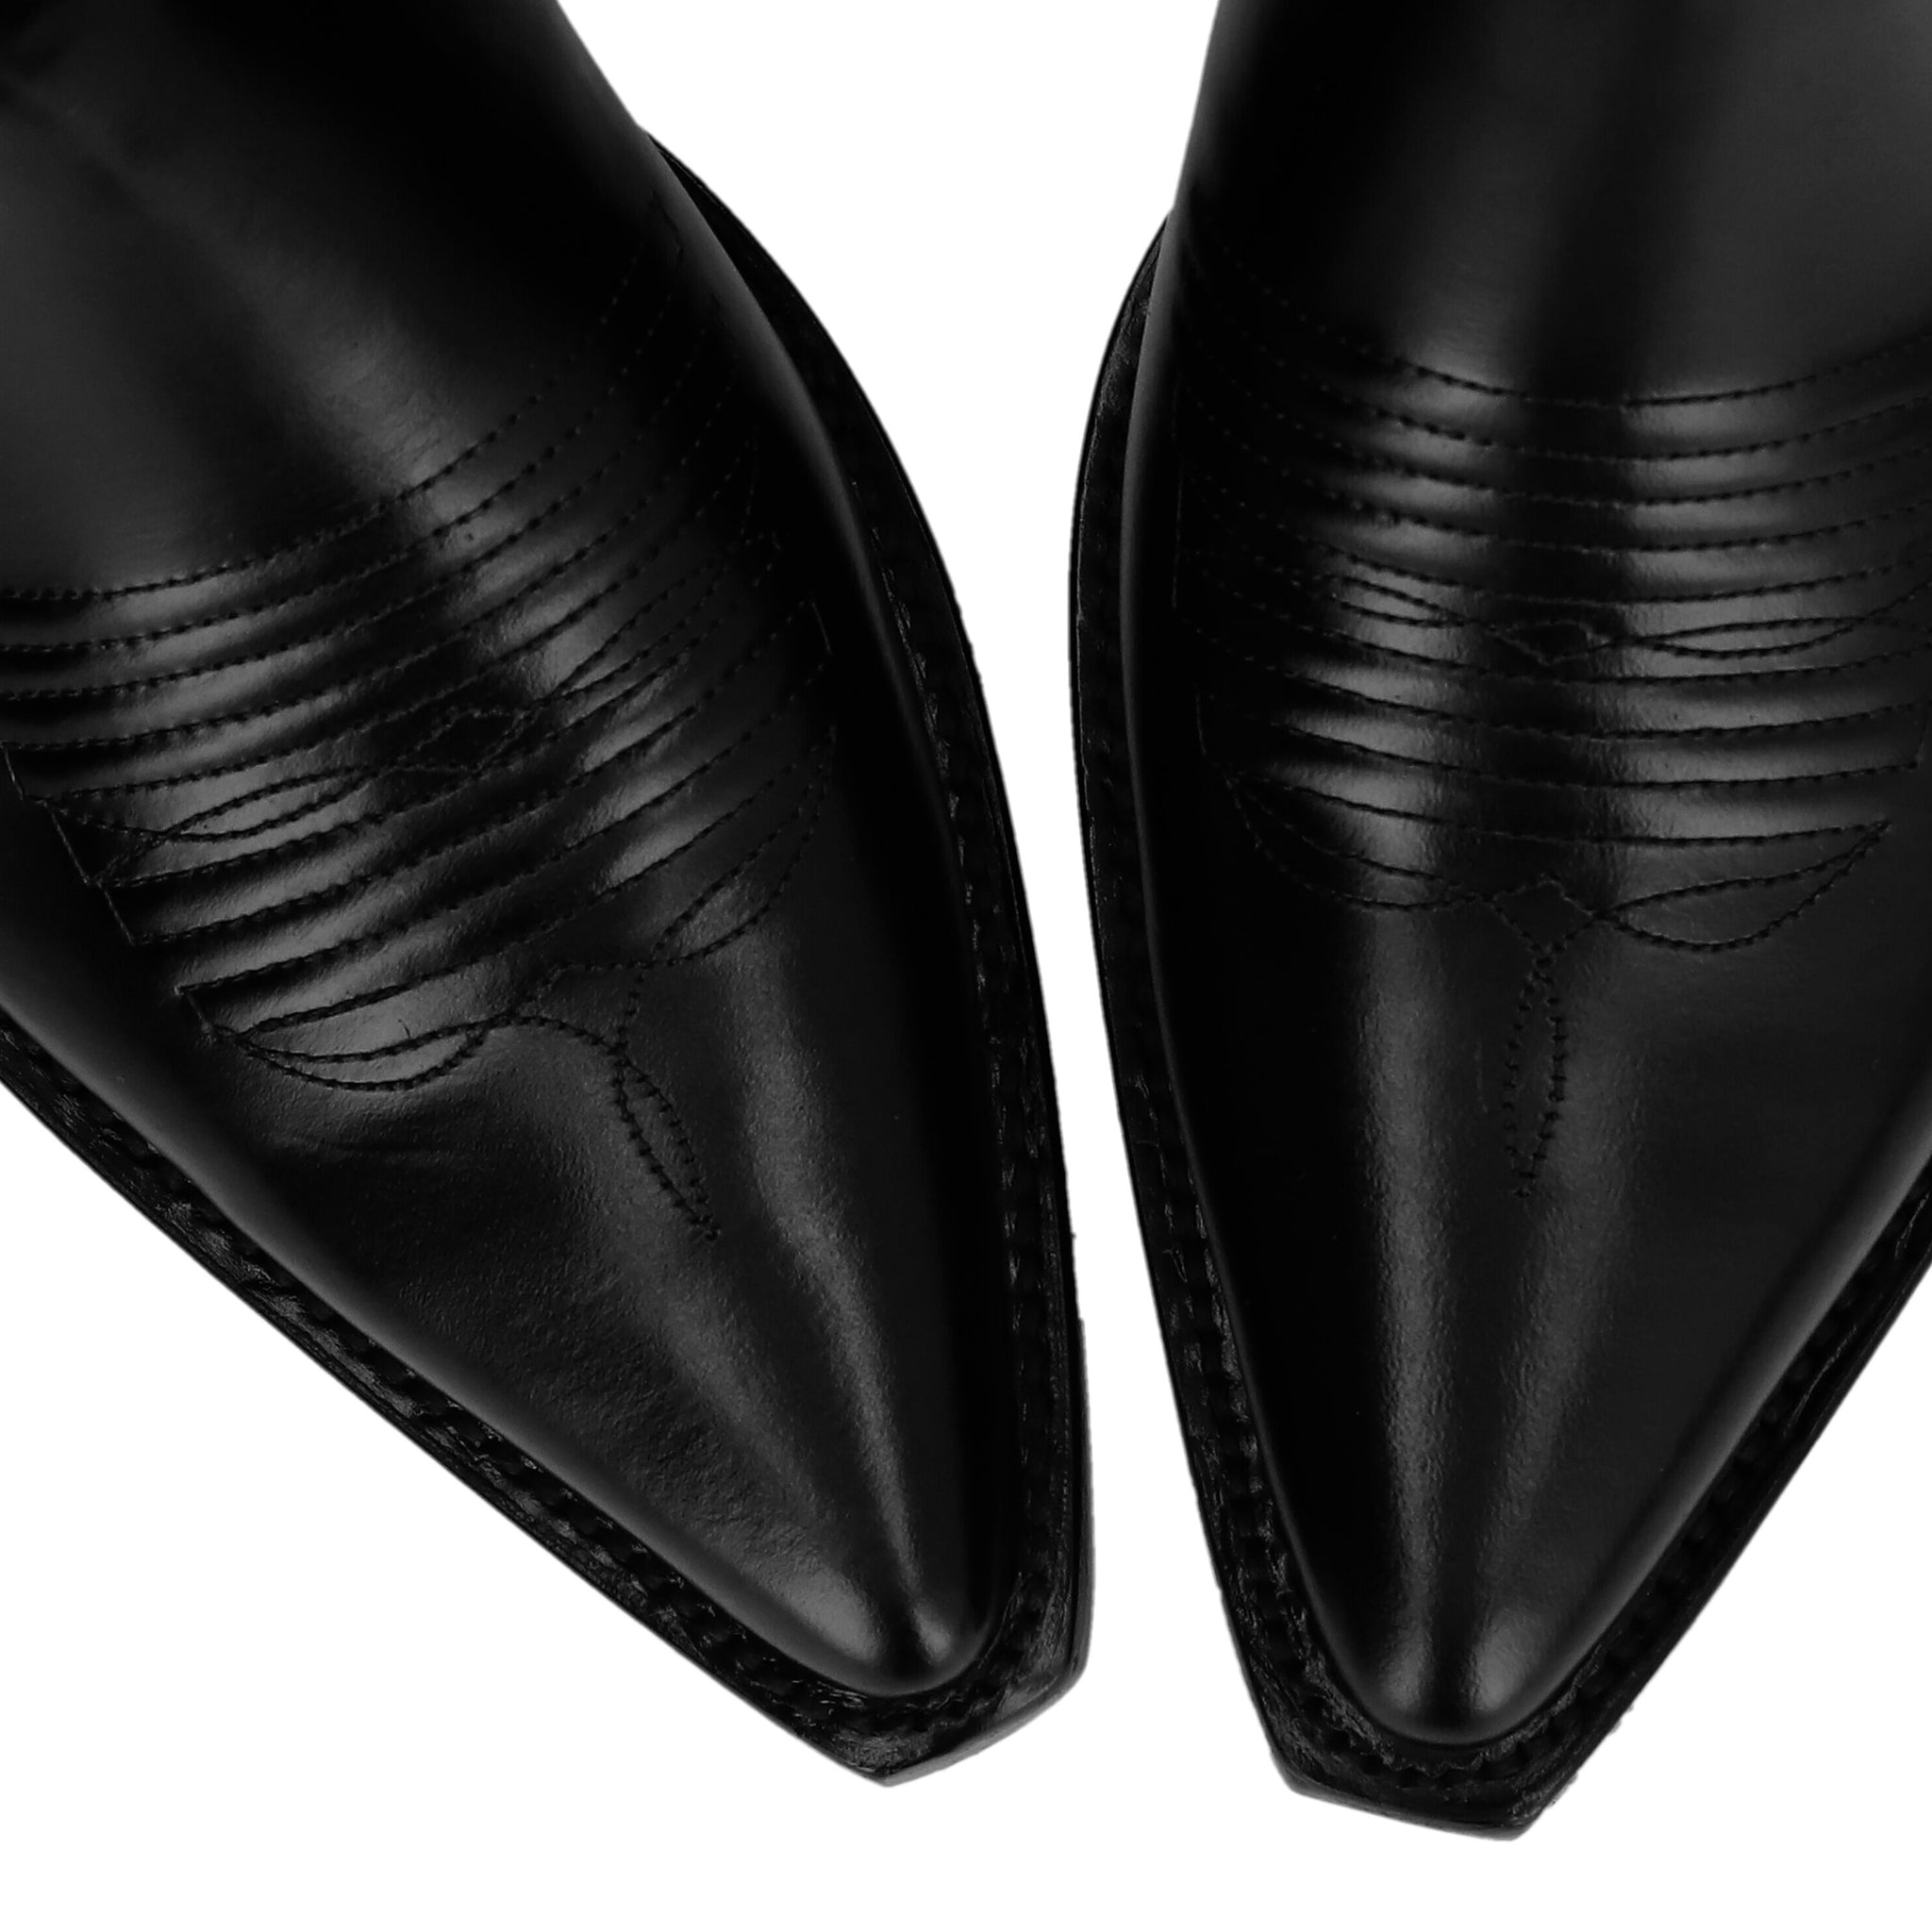 COWBOY‘S CUT // Pointy black boots